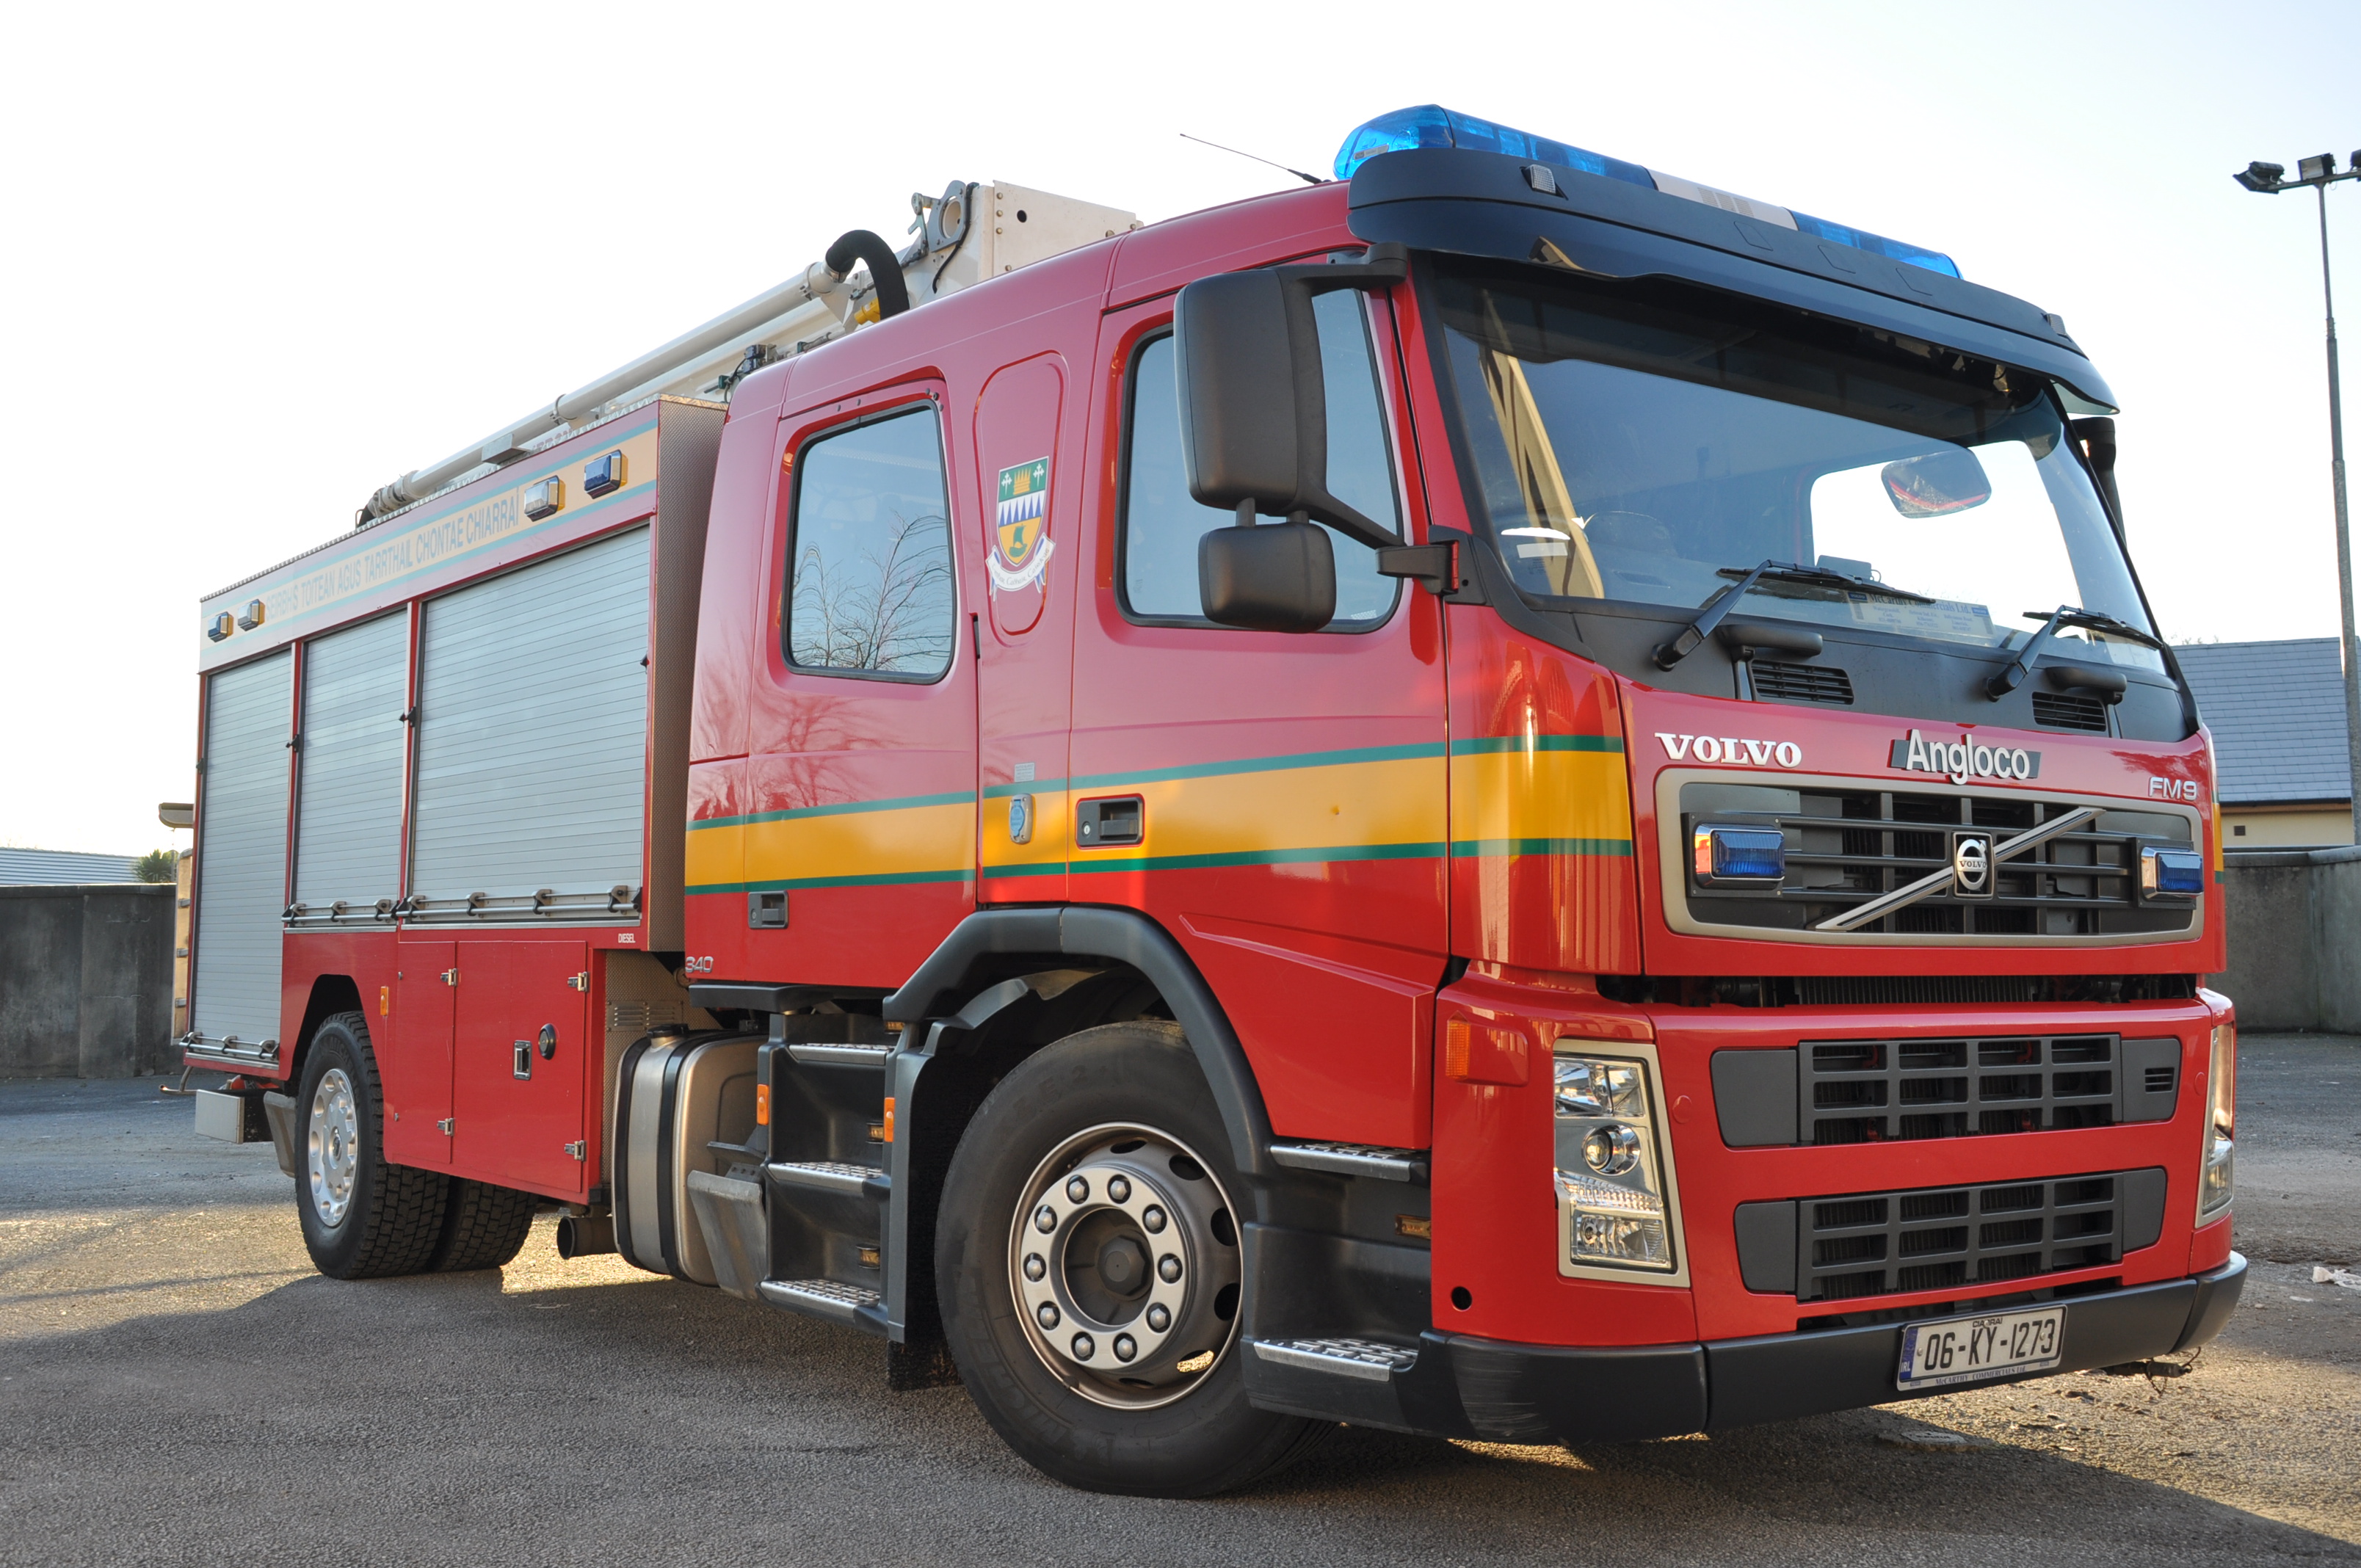 Kerry County Fire & Rescue KY 19E1 Volvo FM9 340 Angloco Bronto ...